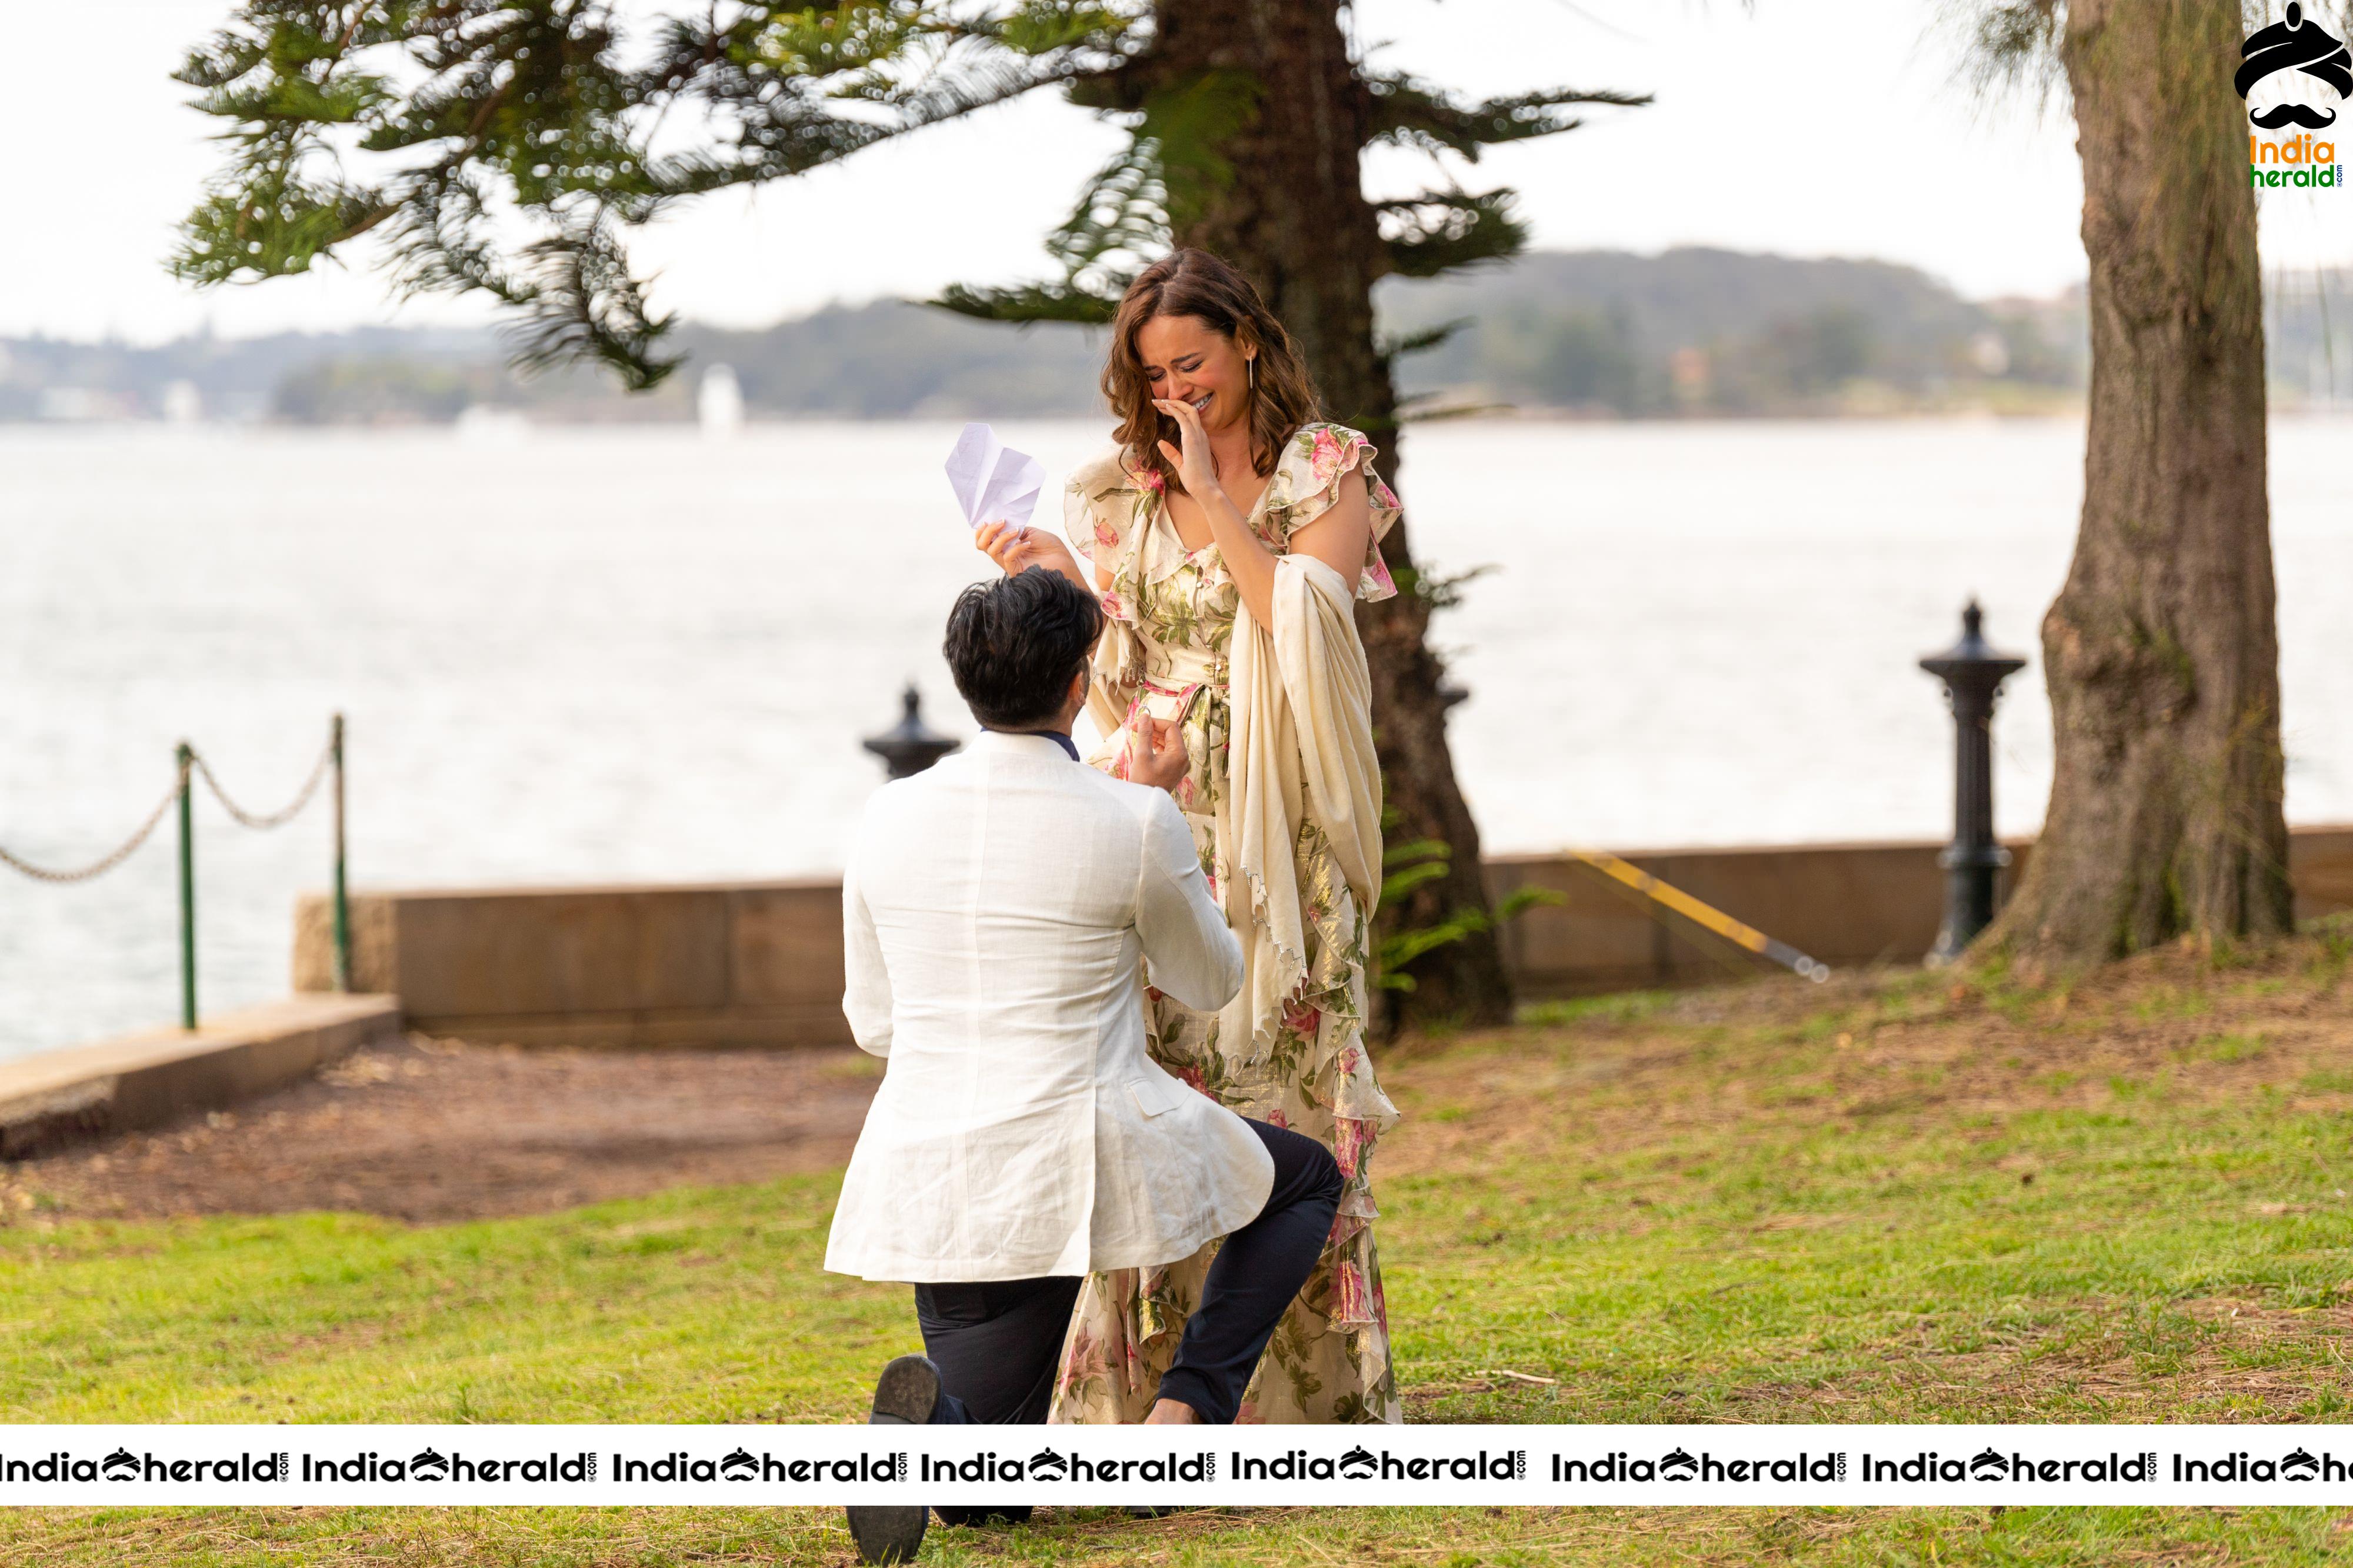 Actress Evelyn Sharma Engaged to Australian Entrepreneur Dr Tushaan Bhindi